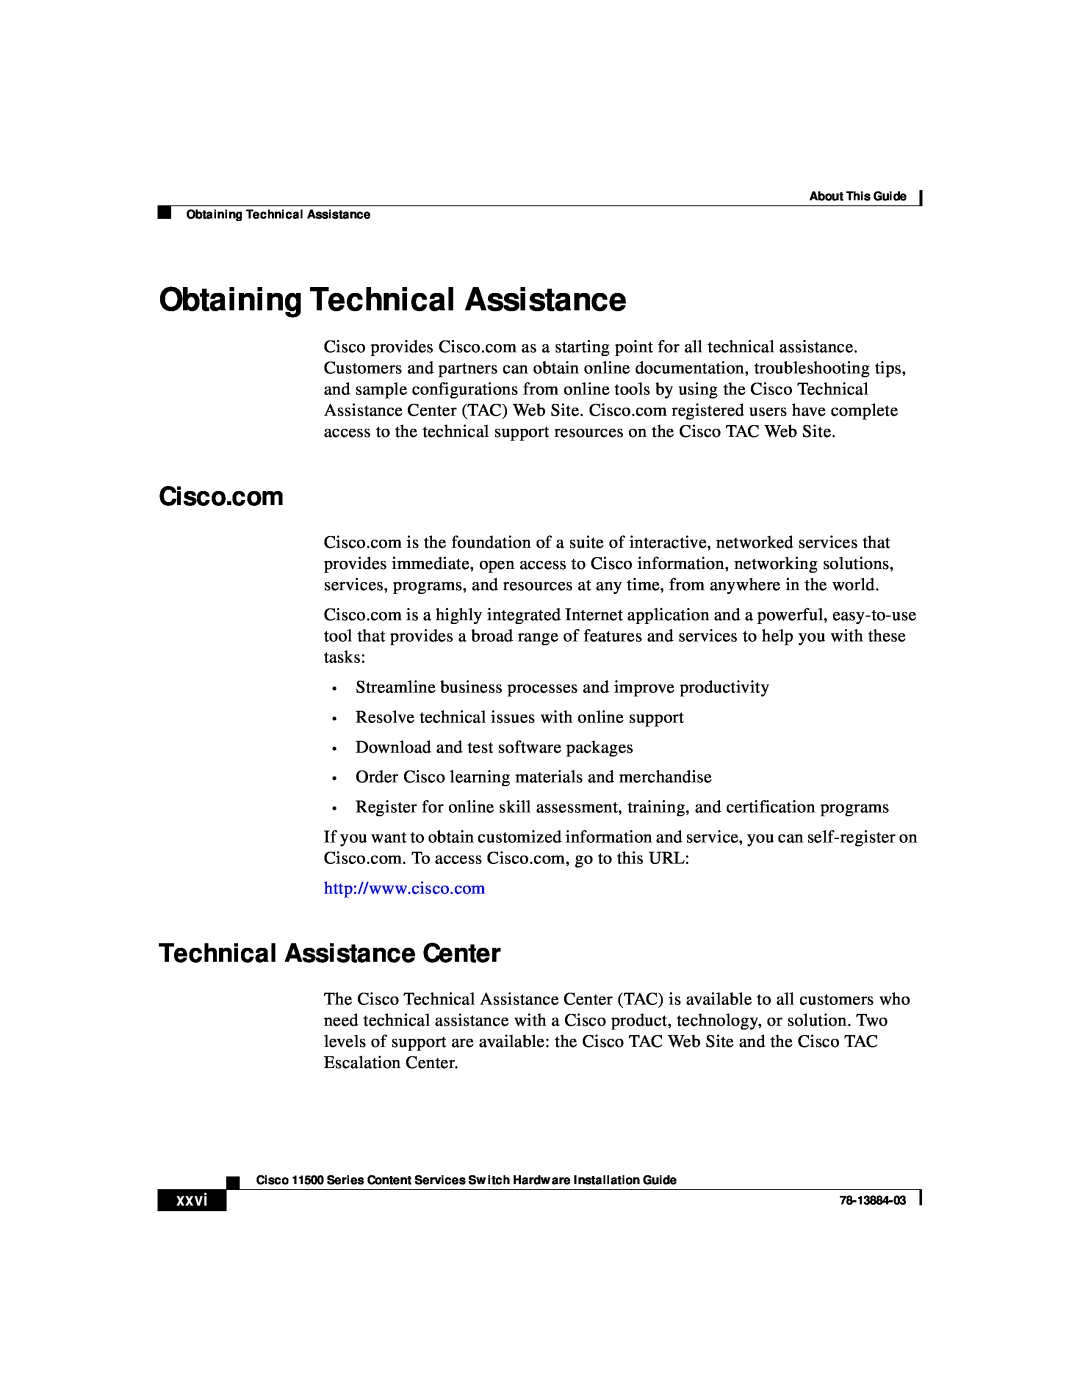 Cisco Systems 11500 Series manual Obtaining Technical Assistance, Cisco.com, Technical Assistance Center, xxvi 